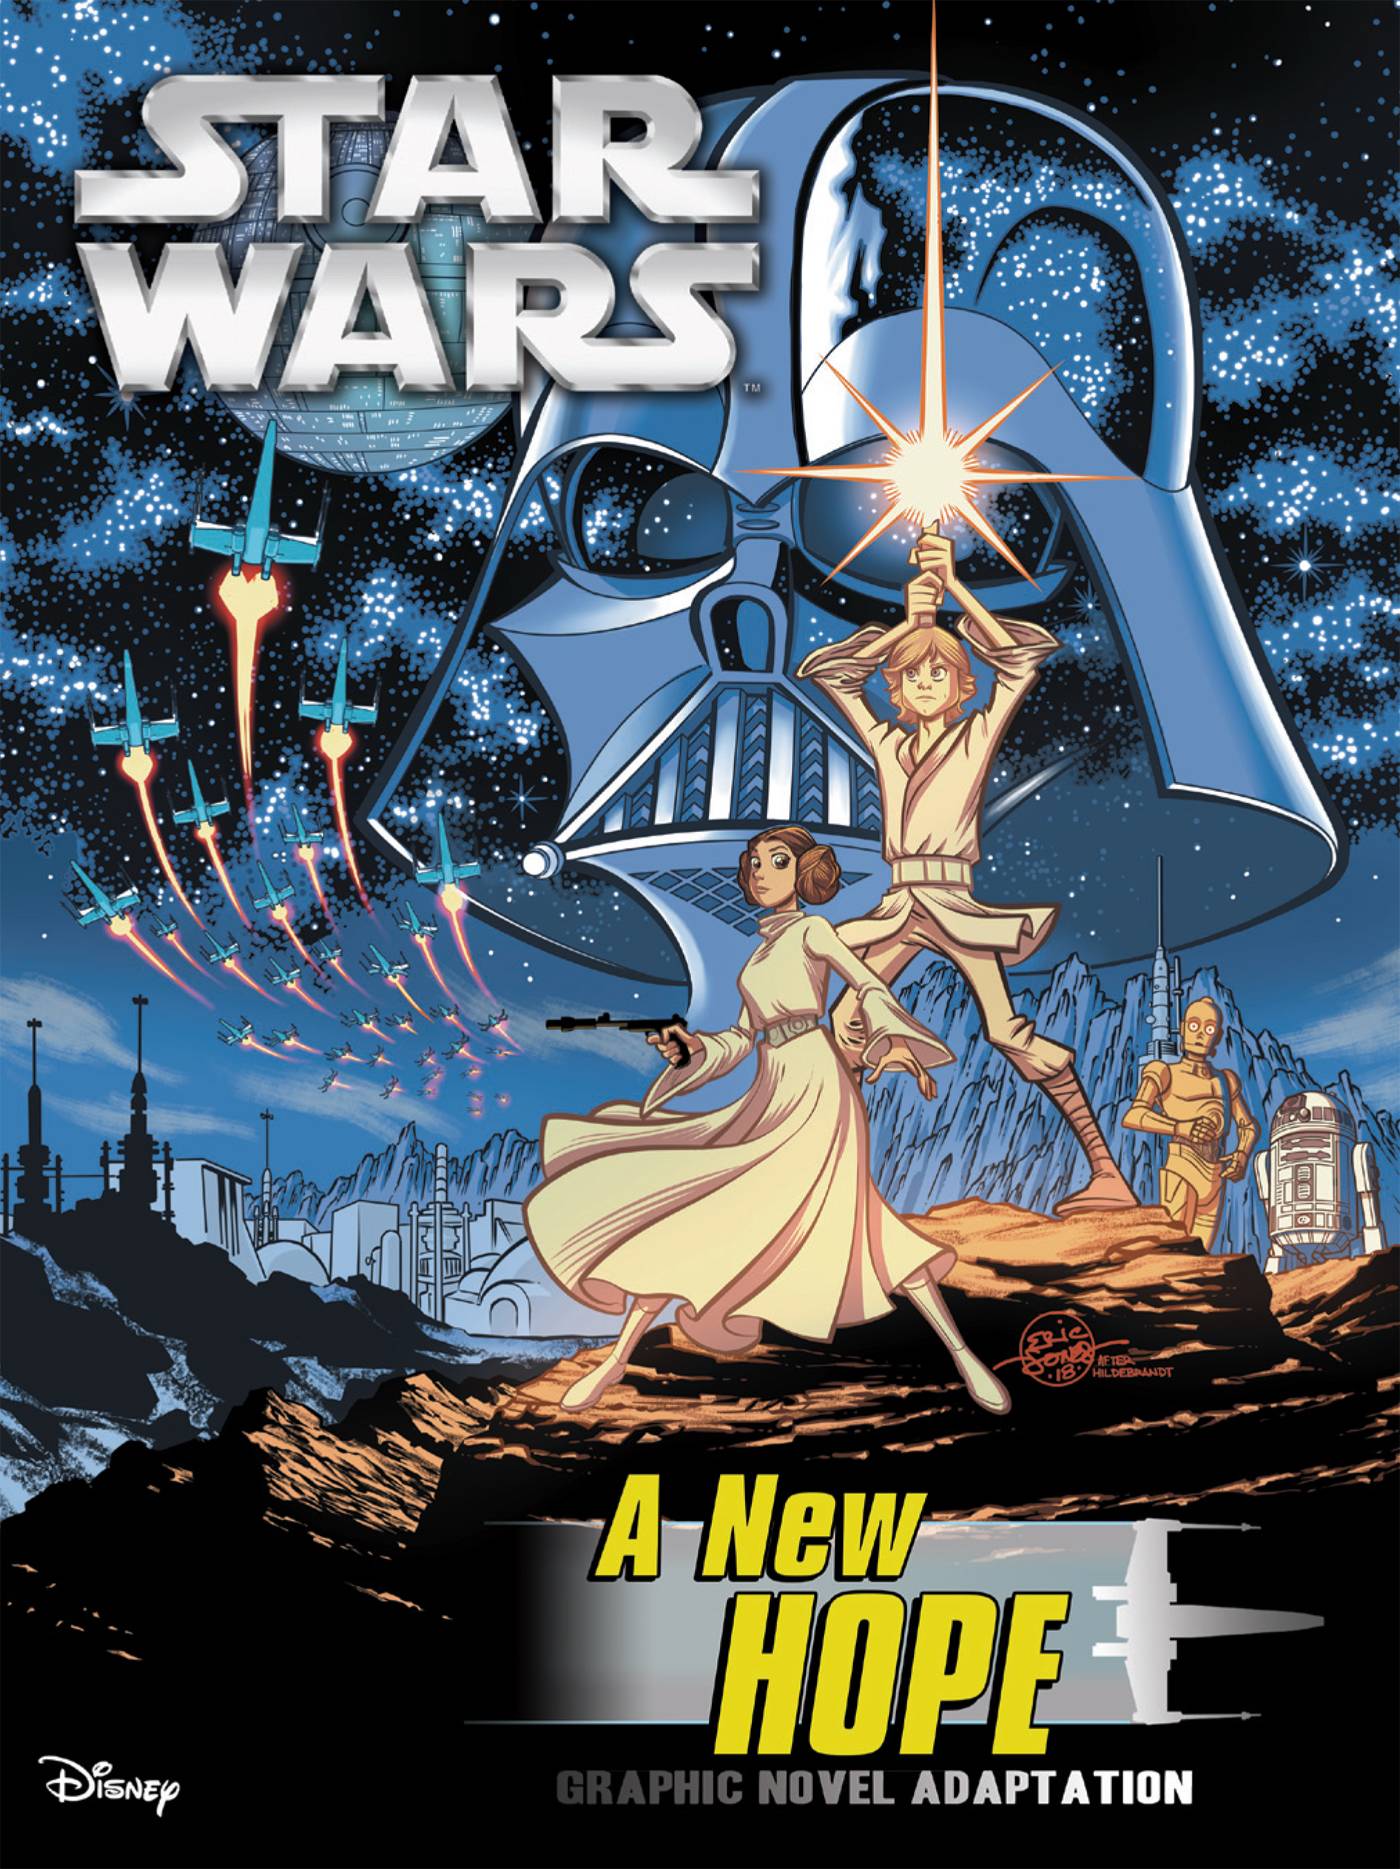 Star Wars New Hope Graphic Novel